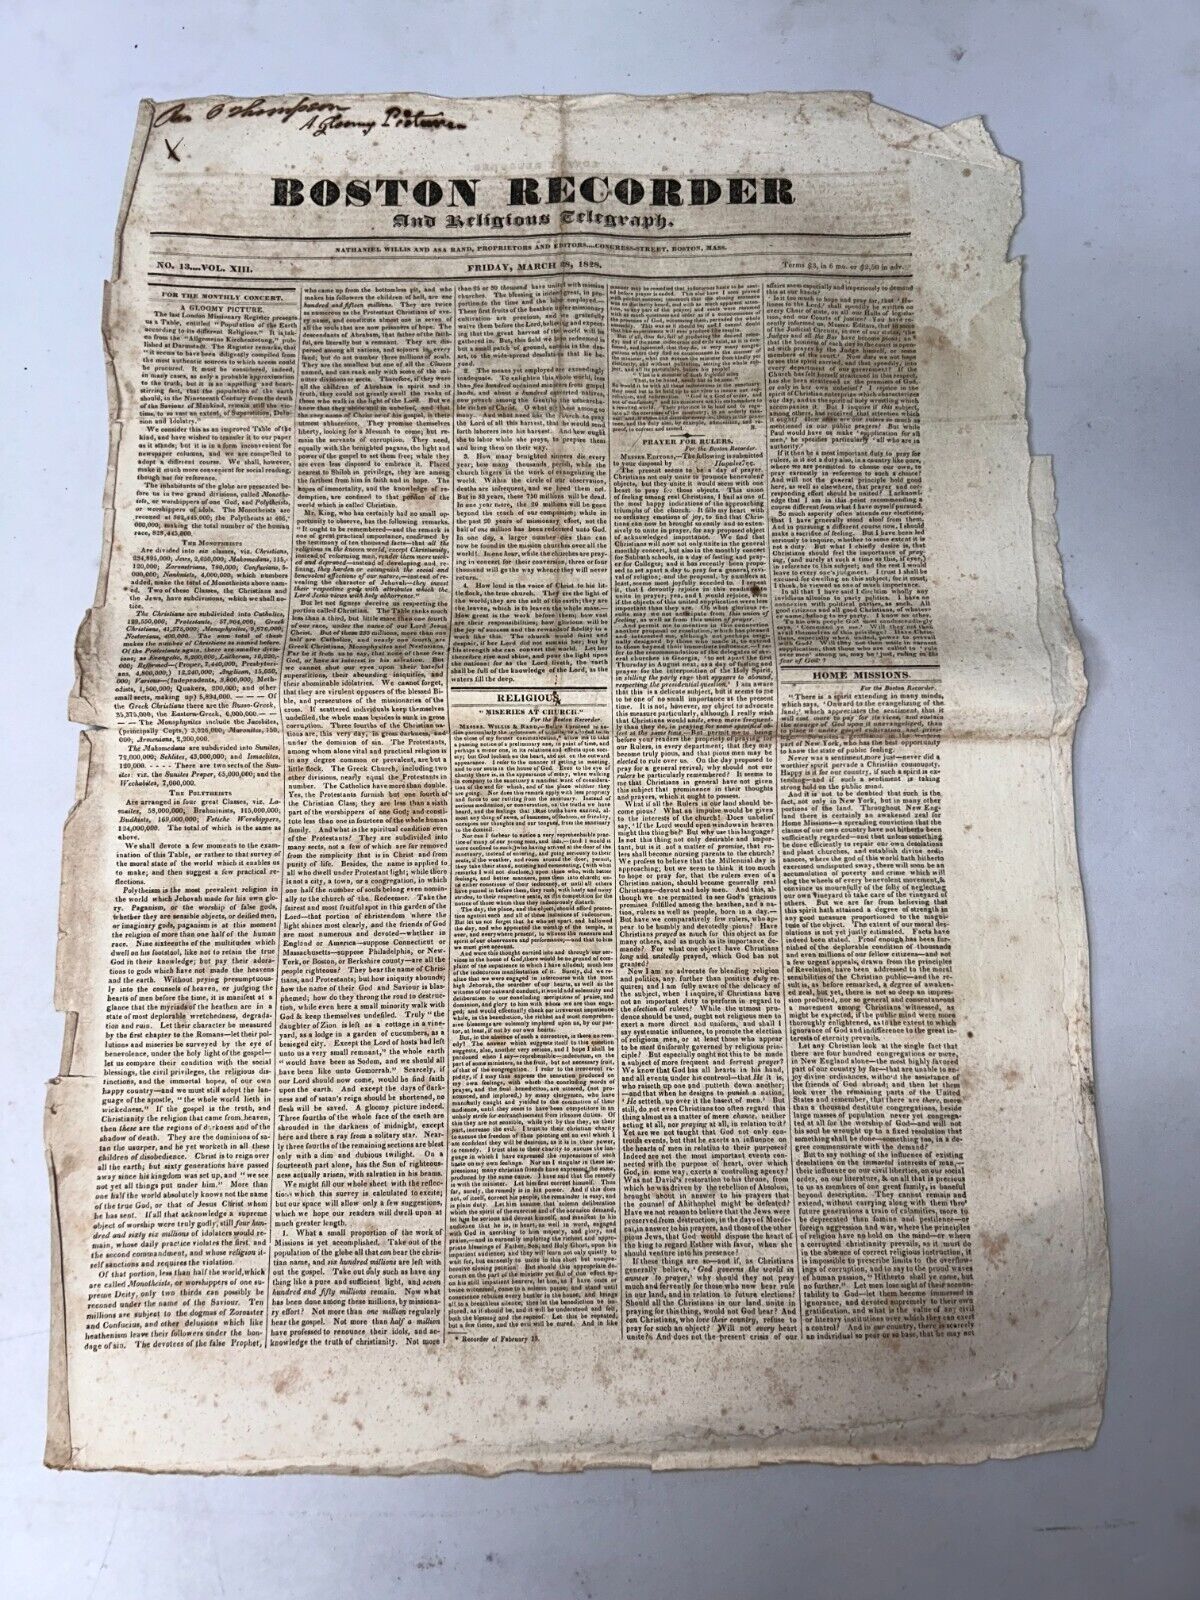 Boston Recorder Nathaniel Willis March 28, 1828 No 13 Vol XIII Newspaper